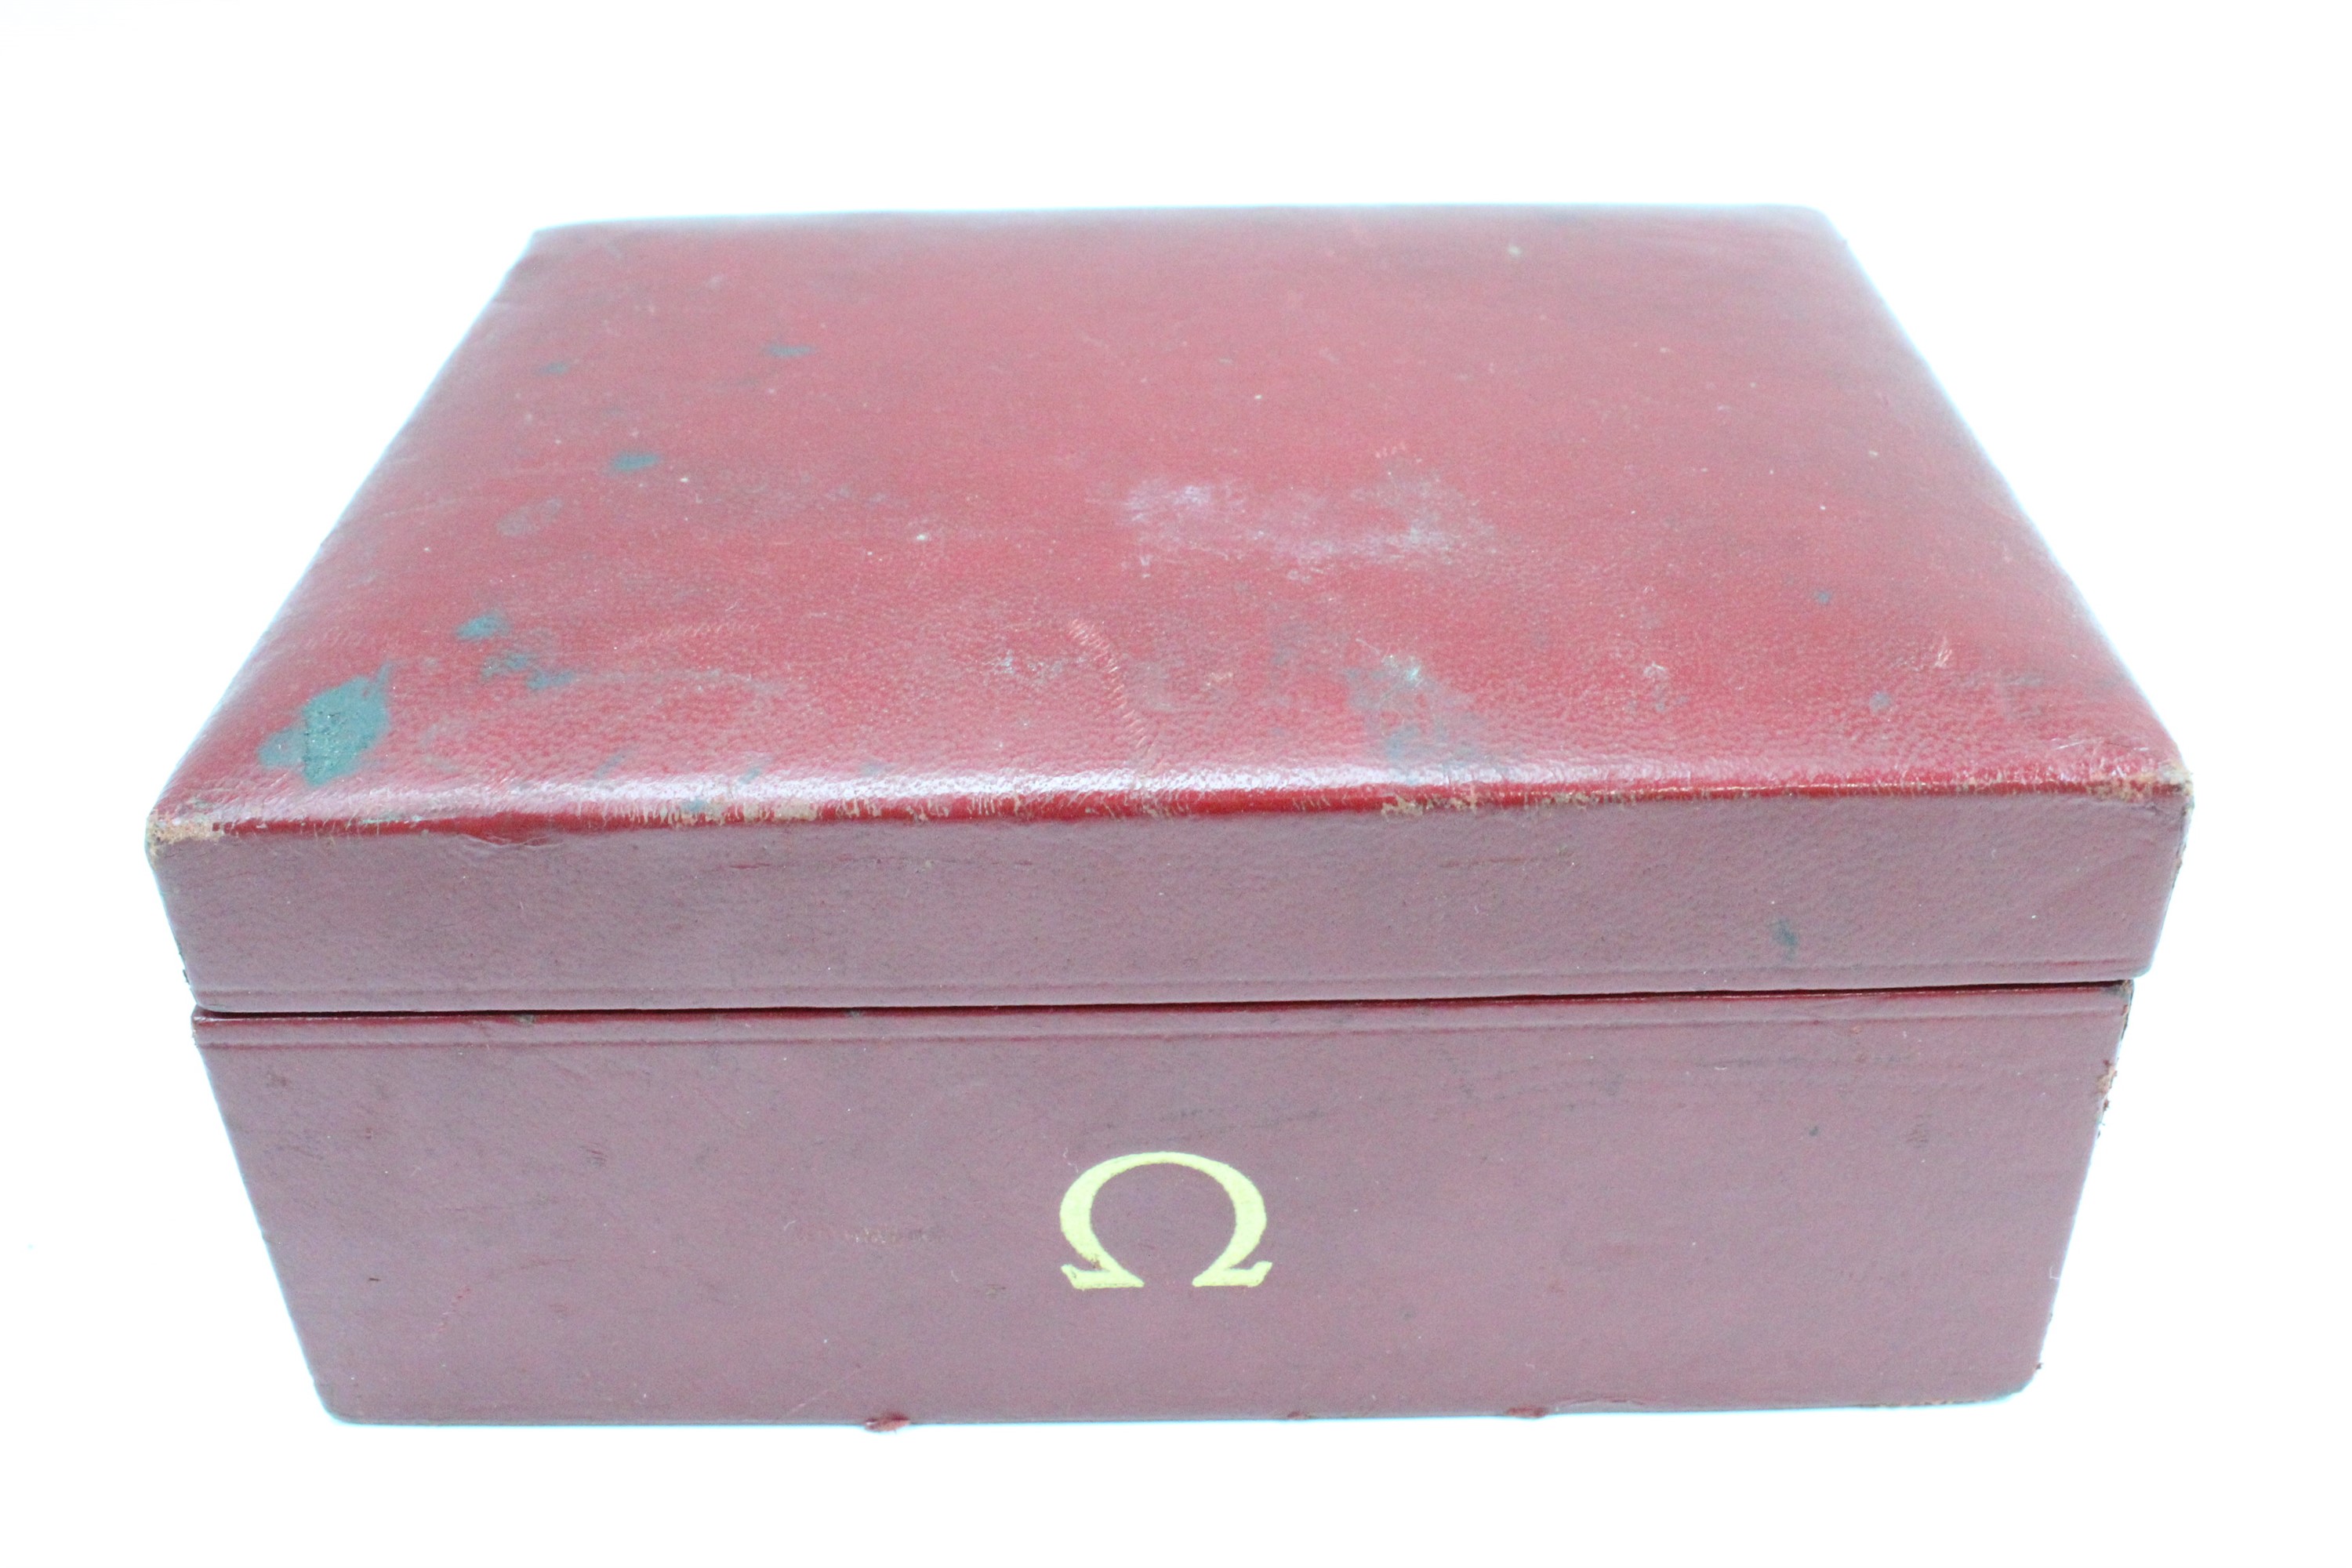 A vintage Omega "Constellation" watch box